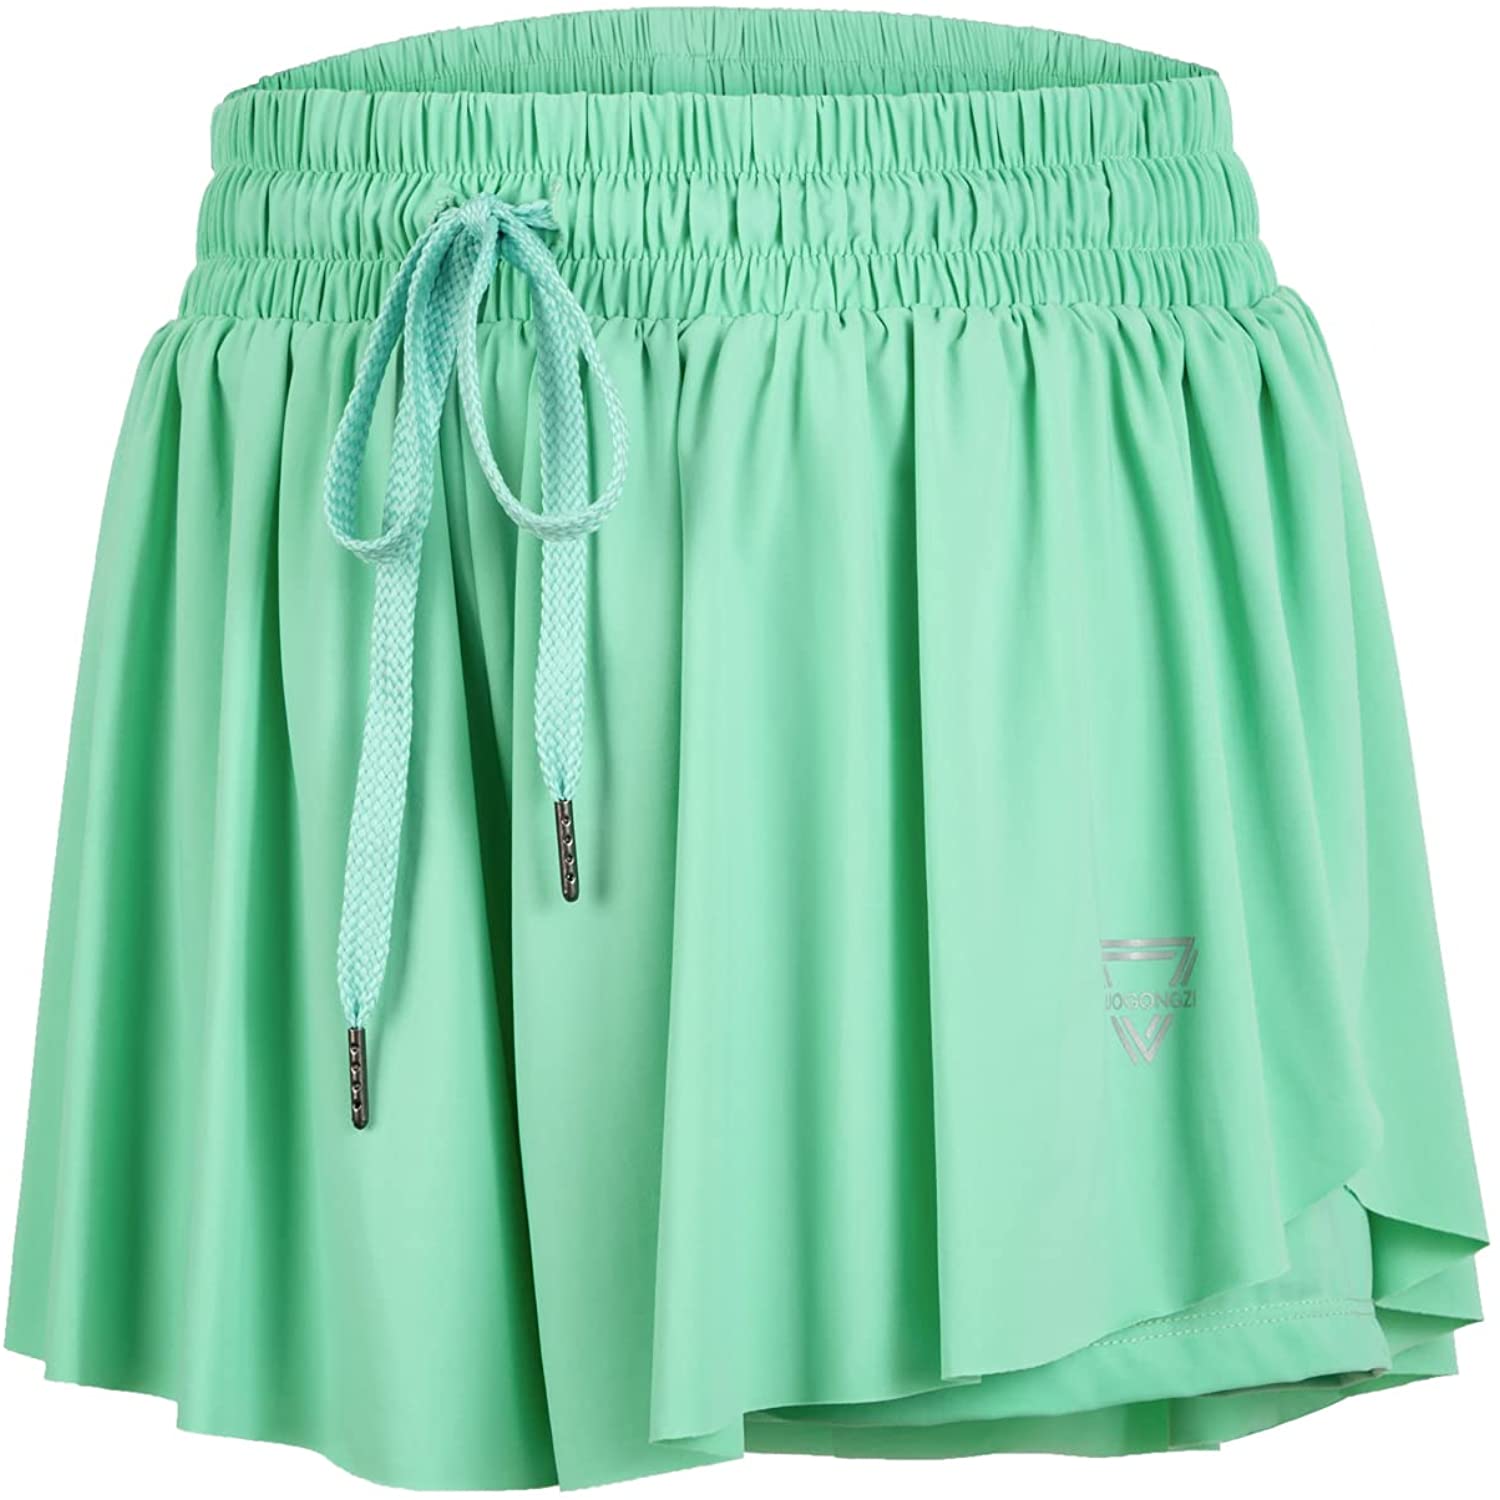 luogongzi Flowy Pleated Skirt for Women Gym Athletic Shorts